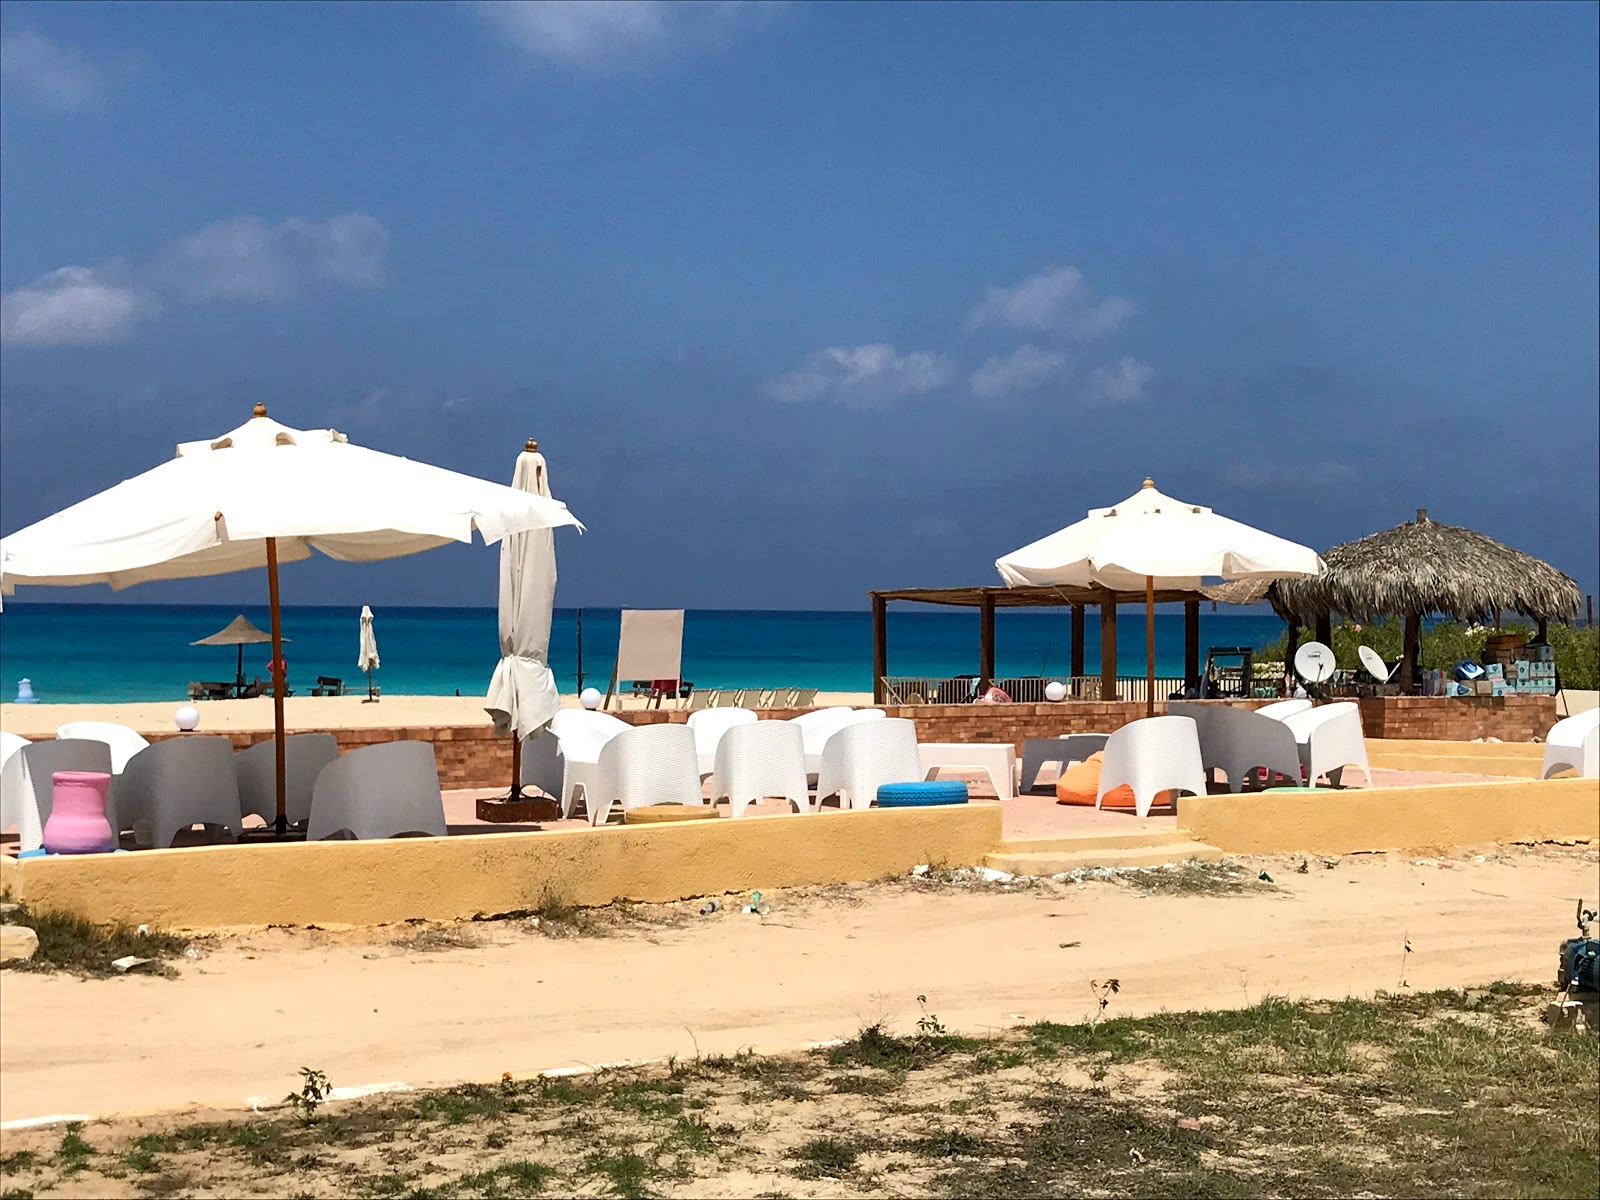 Foto de Farah Beach - lugar popular entre os apreciadores de relaxamento